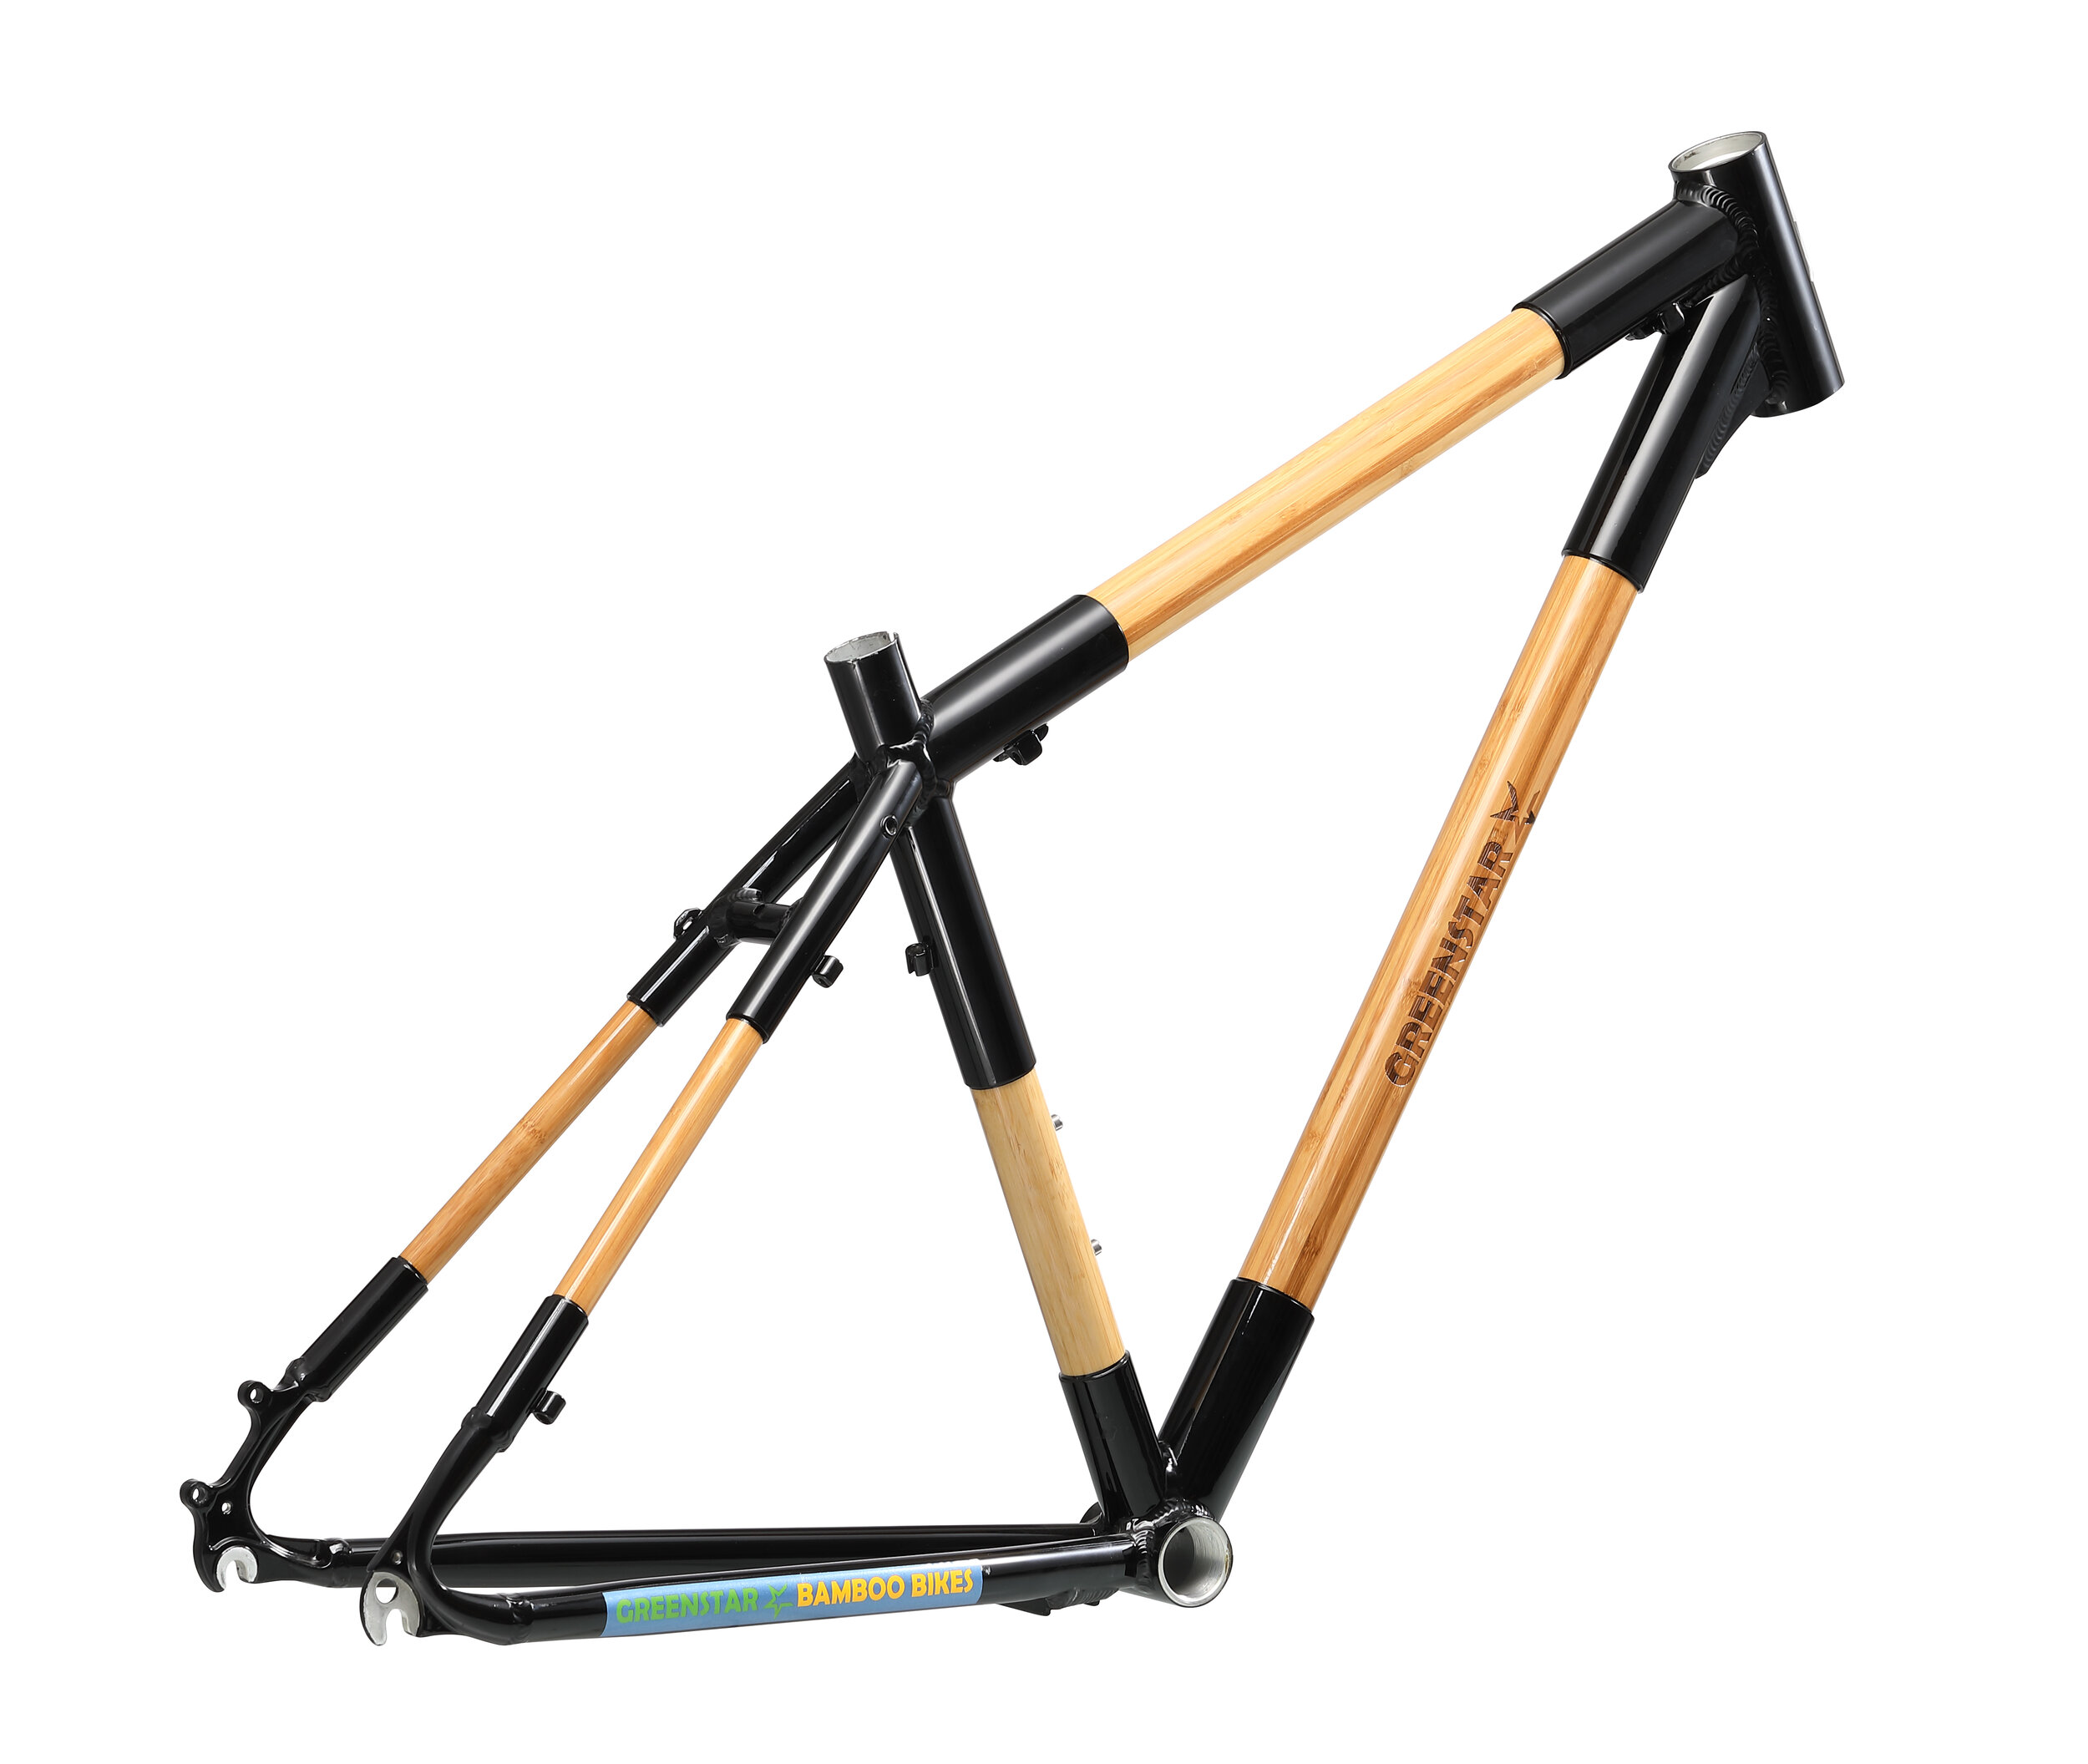 Greenstar Bikes EcoCross Hybrid Bamboo Bicycle